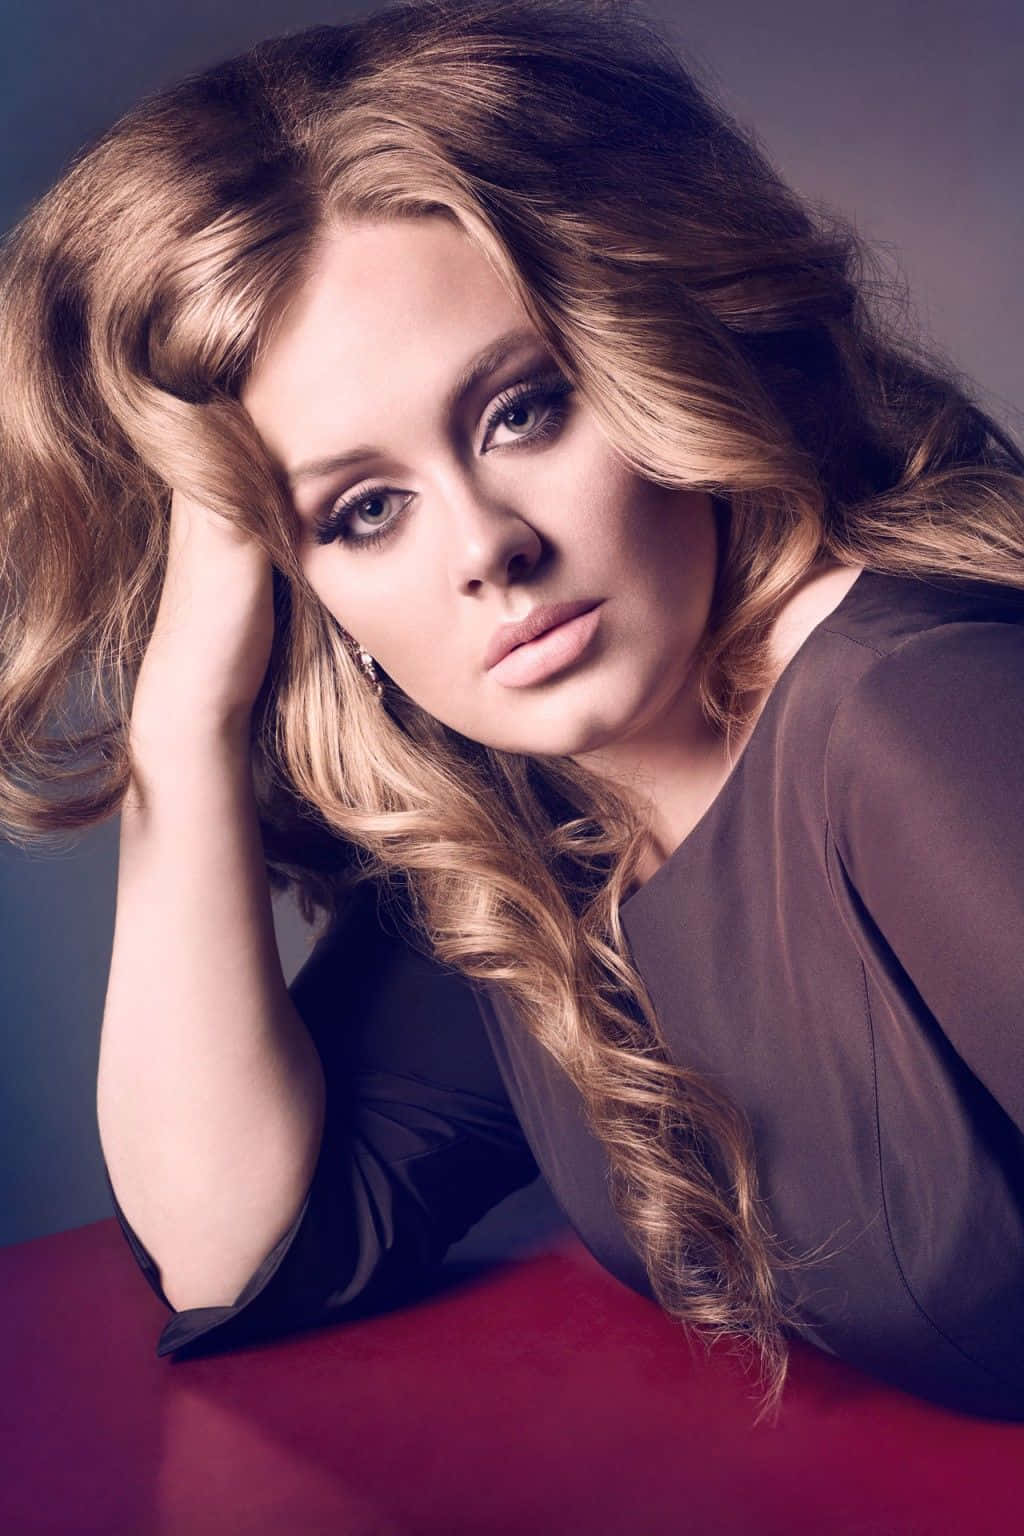 Imagenla Talentosa Cantante Adele Interpreta Con Su Poder Característico